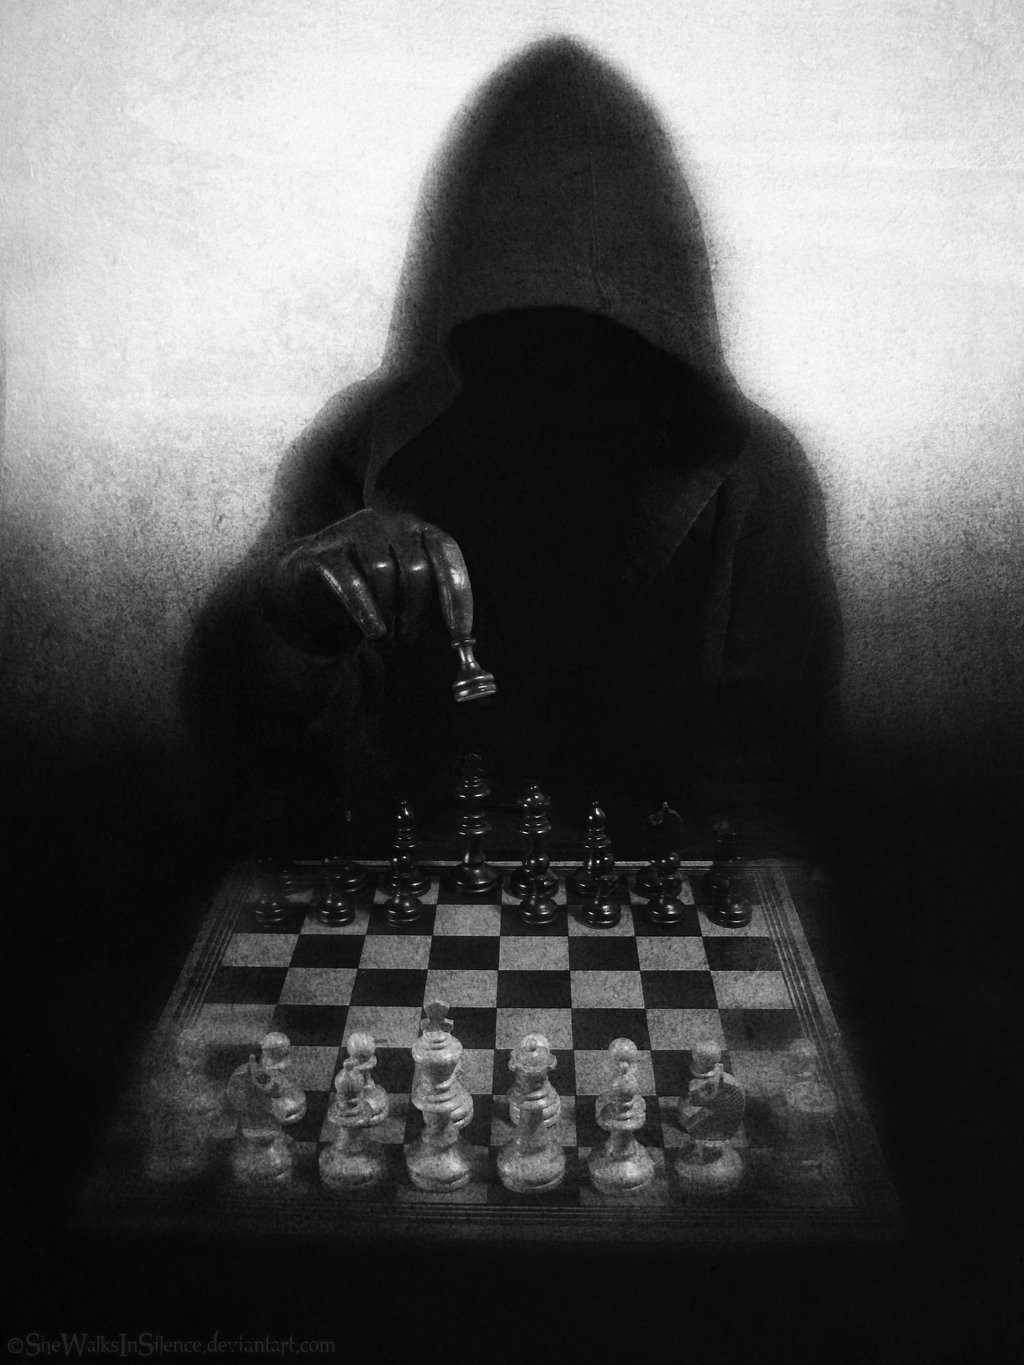 General 1024x1365 digital art Grim Reaper death dark monochrome spooky chess board games pawns hoods portrait display DeviantArt